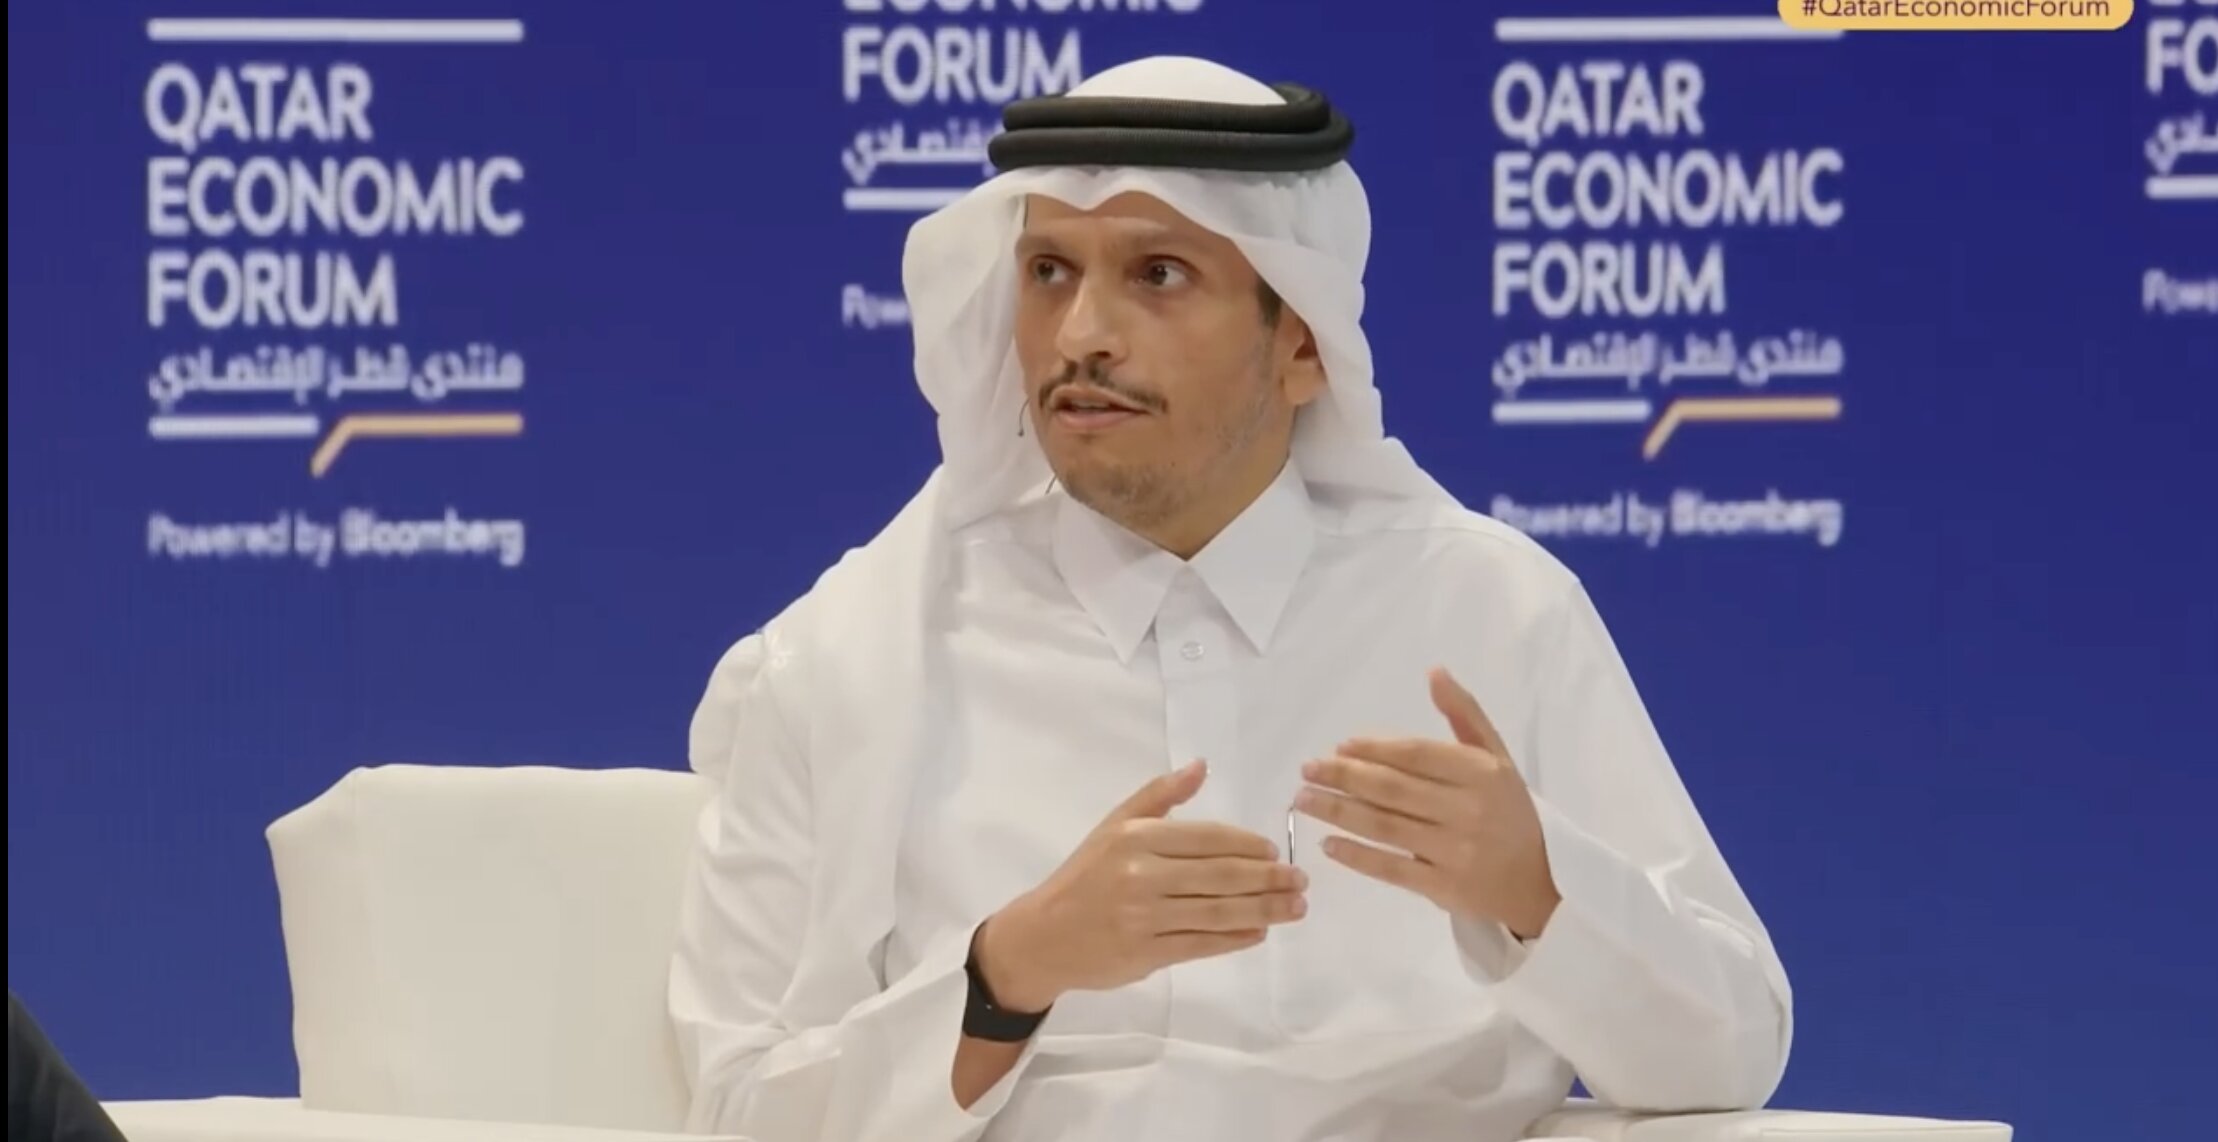 Project Fanar: Qatar Invests QR 9 Billion in Artificial Intelligence